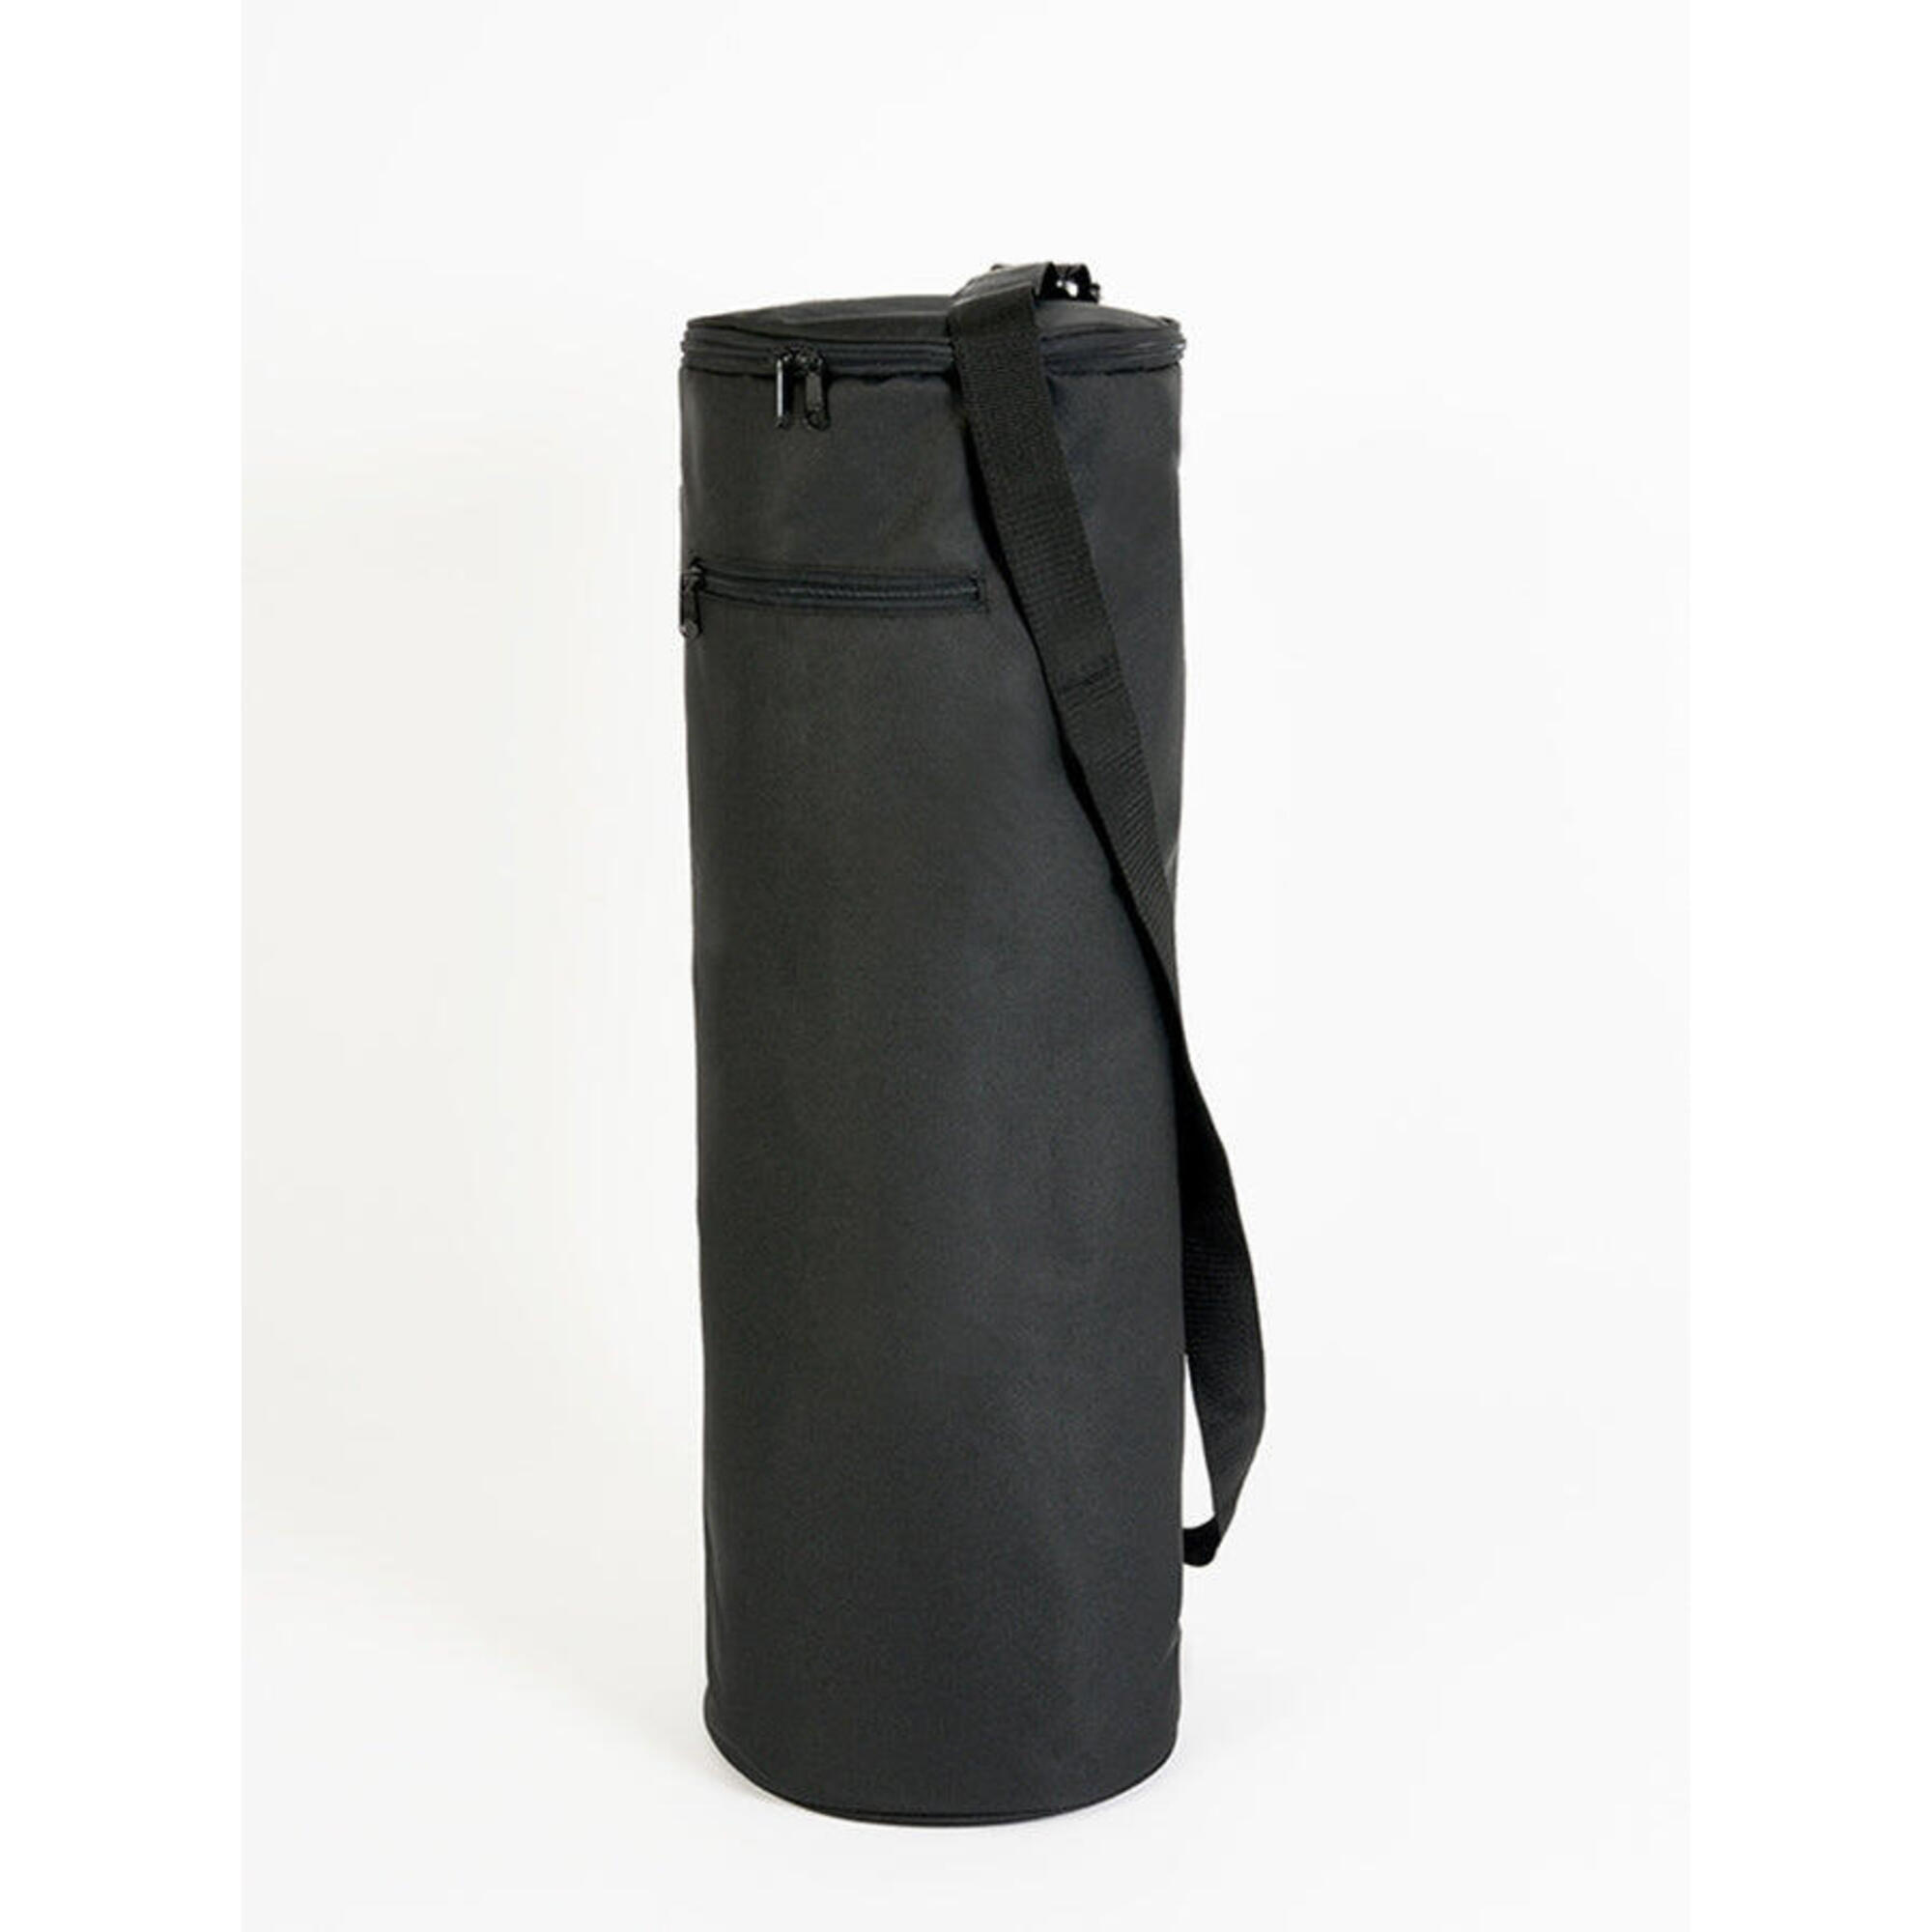 YOGA STUDIO Yoga Studio Yoga Kit Bag - Top Loading - Black